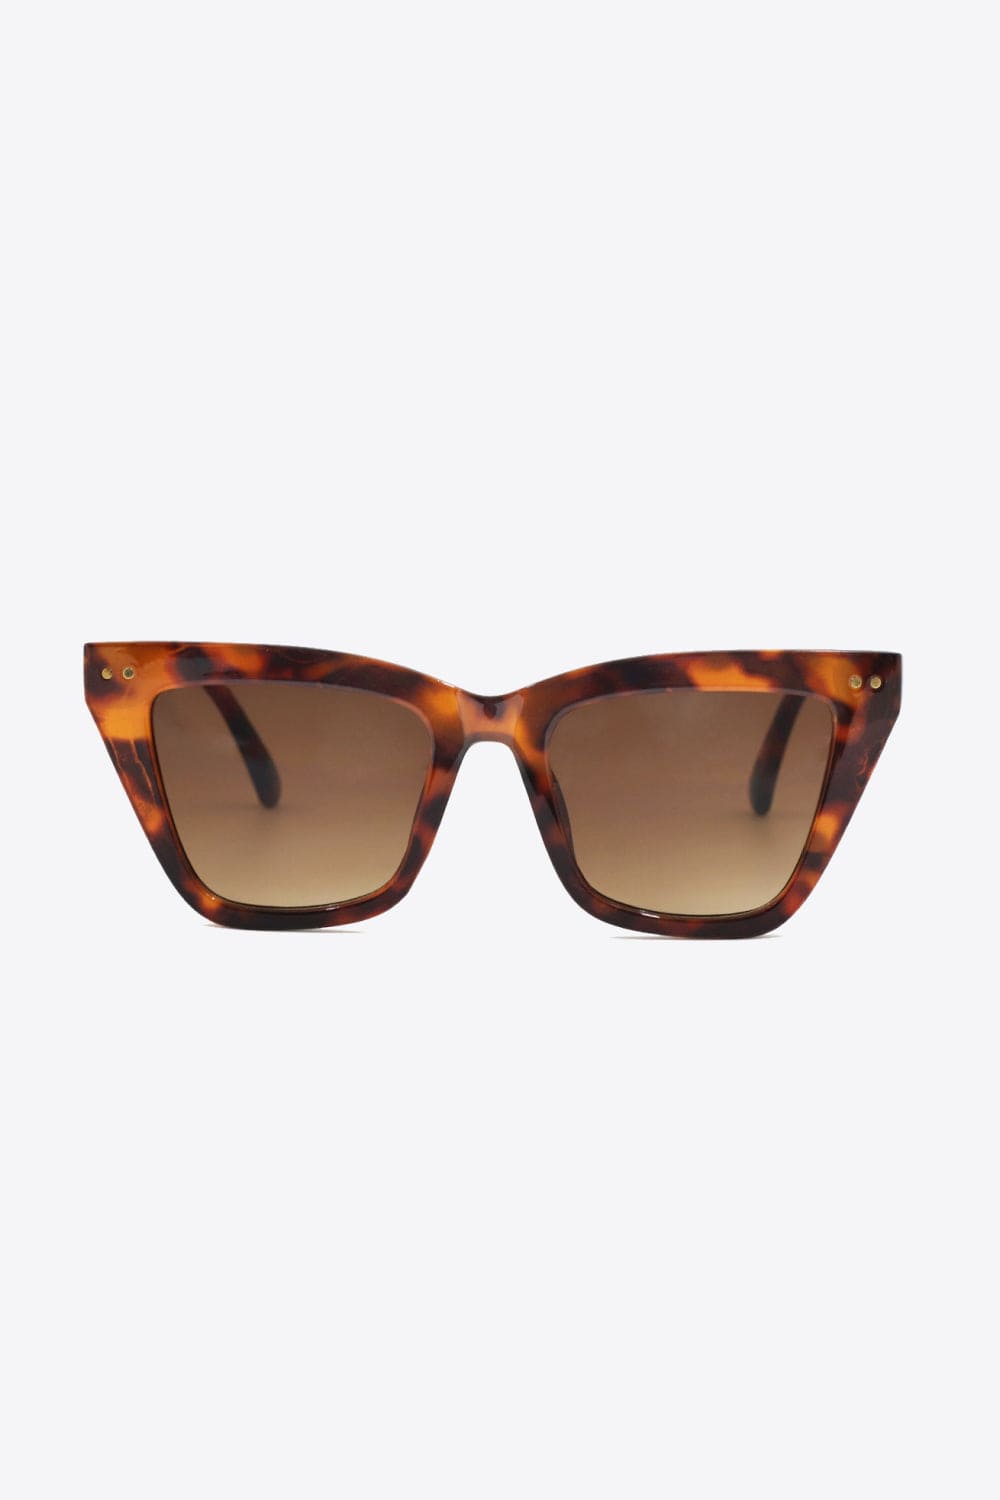 The802Gypsy sunglasses Caramel / One Size GYPSY-UV400 Polycarbonate Frame Sunglasses